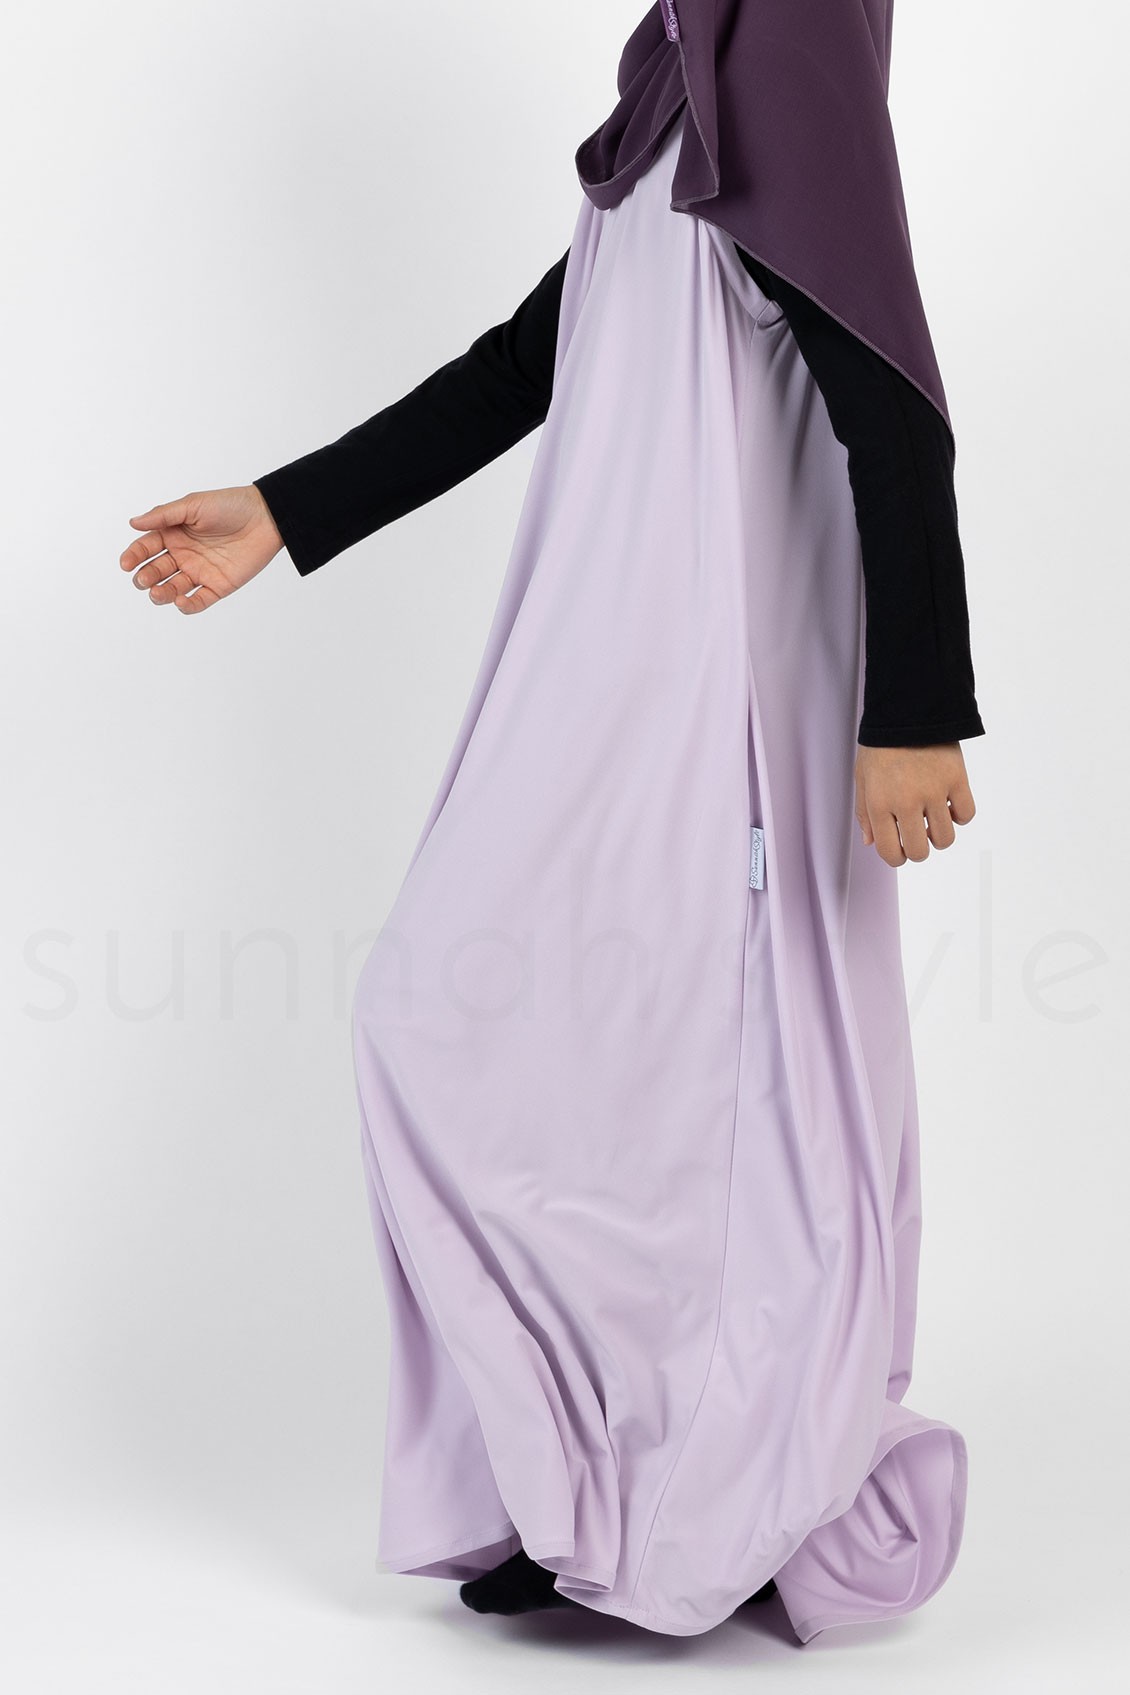 Sunnah Style Girls Sleeveless Jersey Abaya Lavender